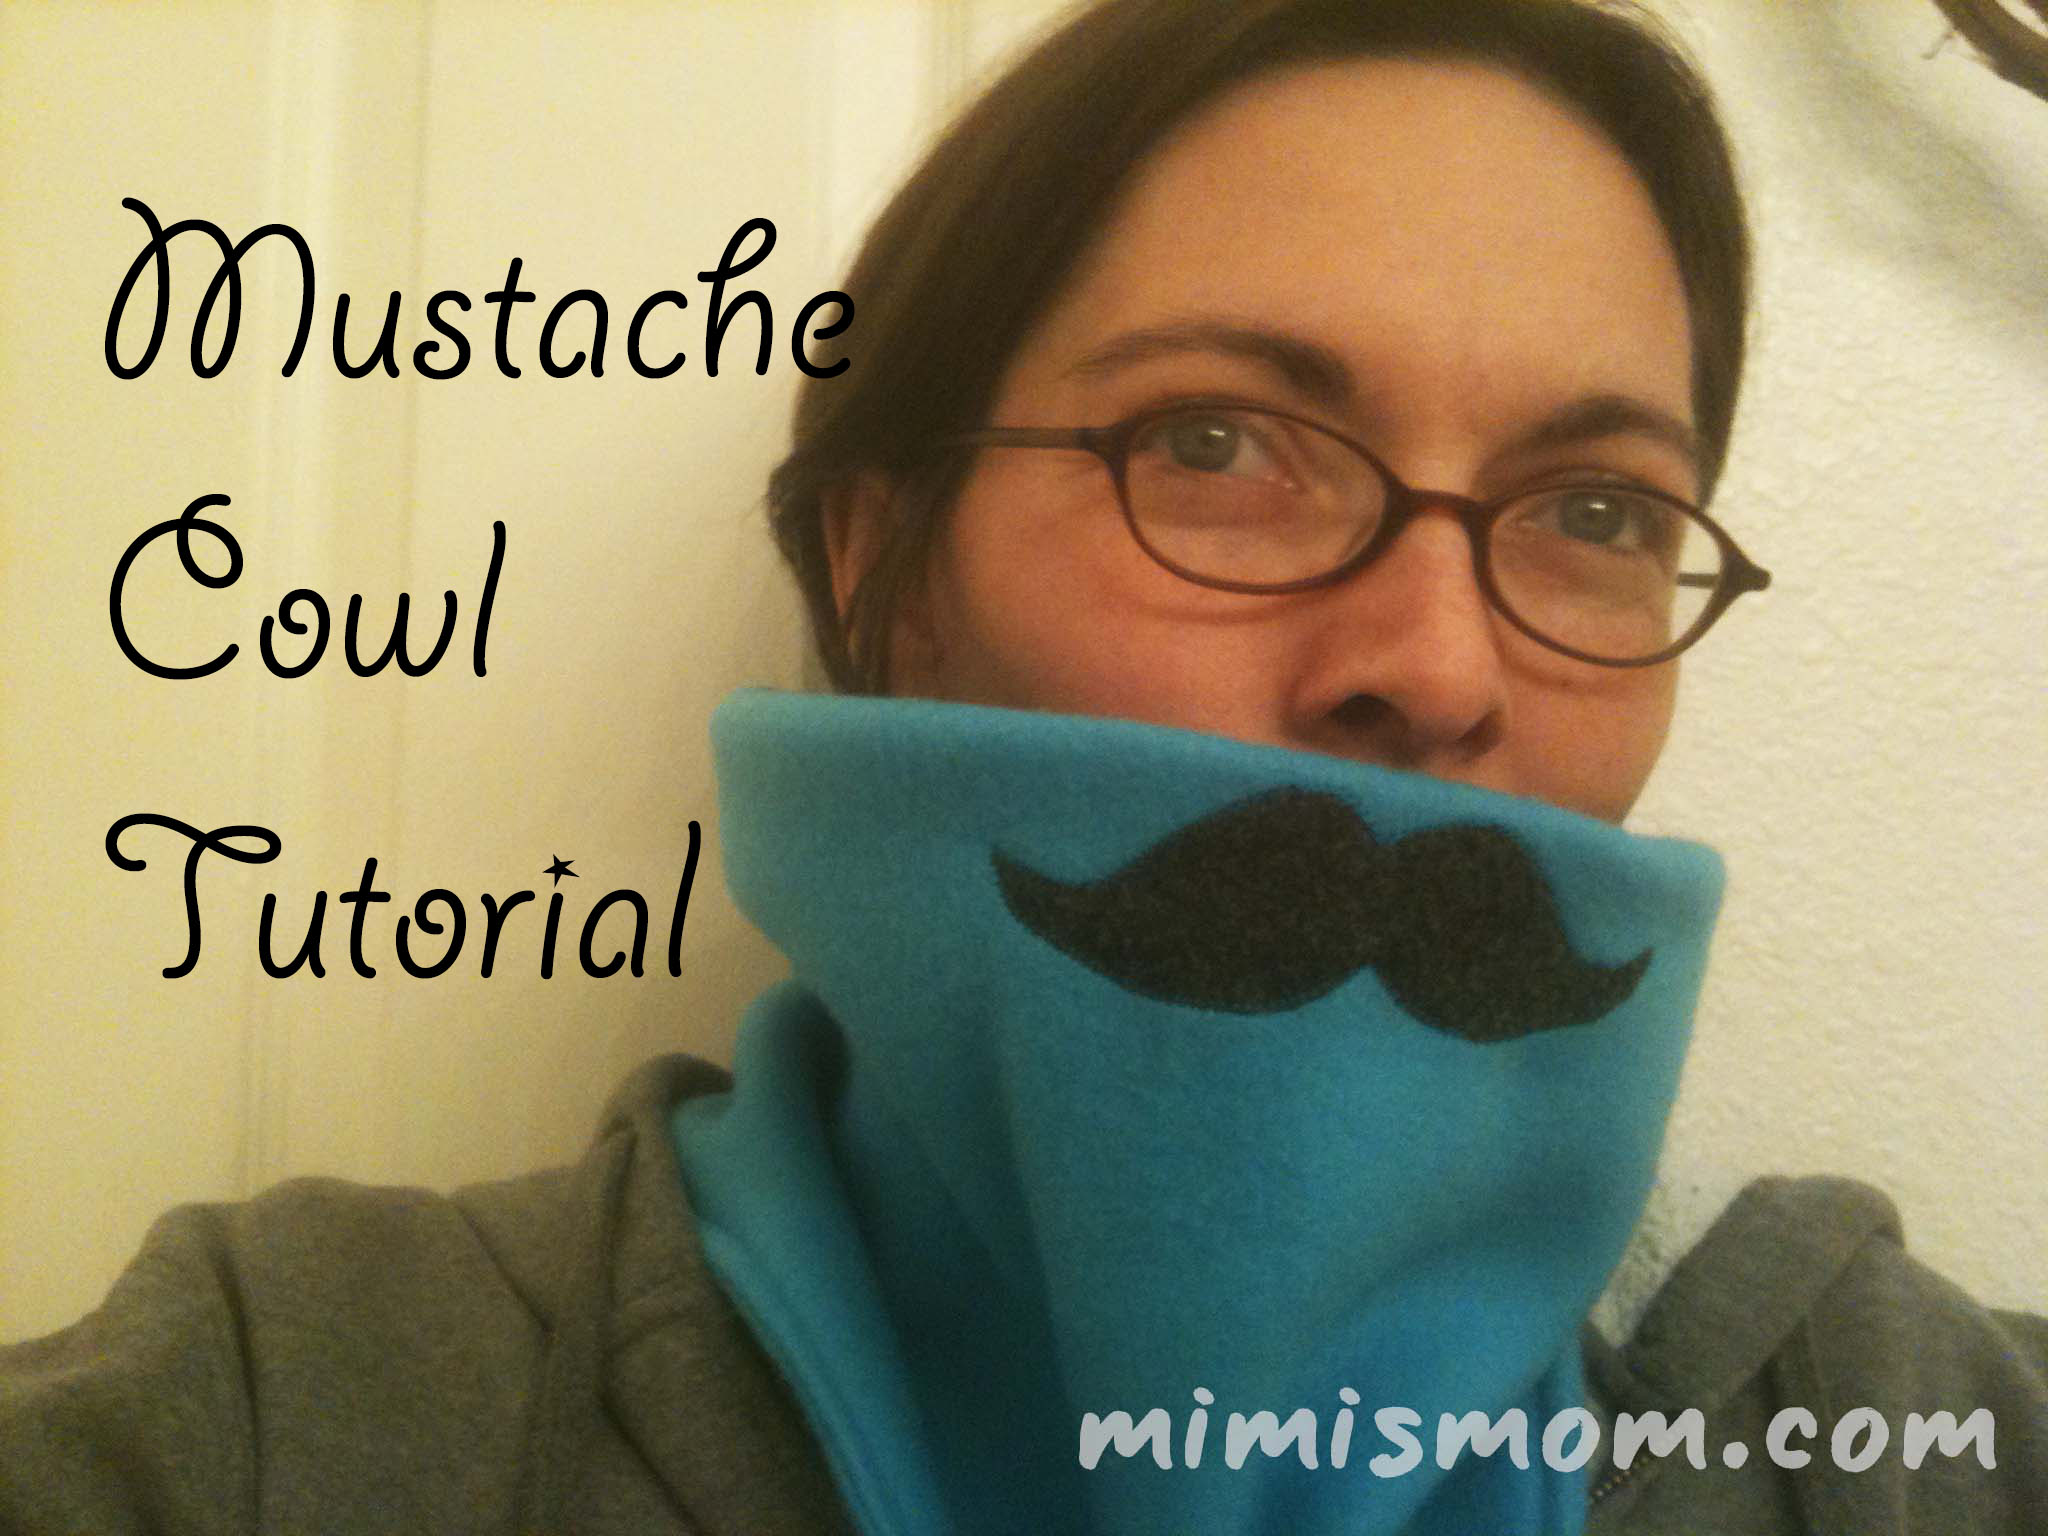 Mustache Cowl for Movember